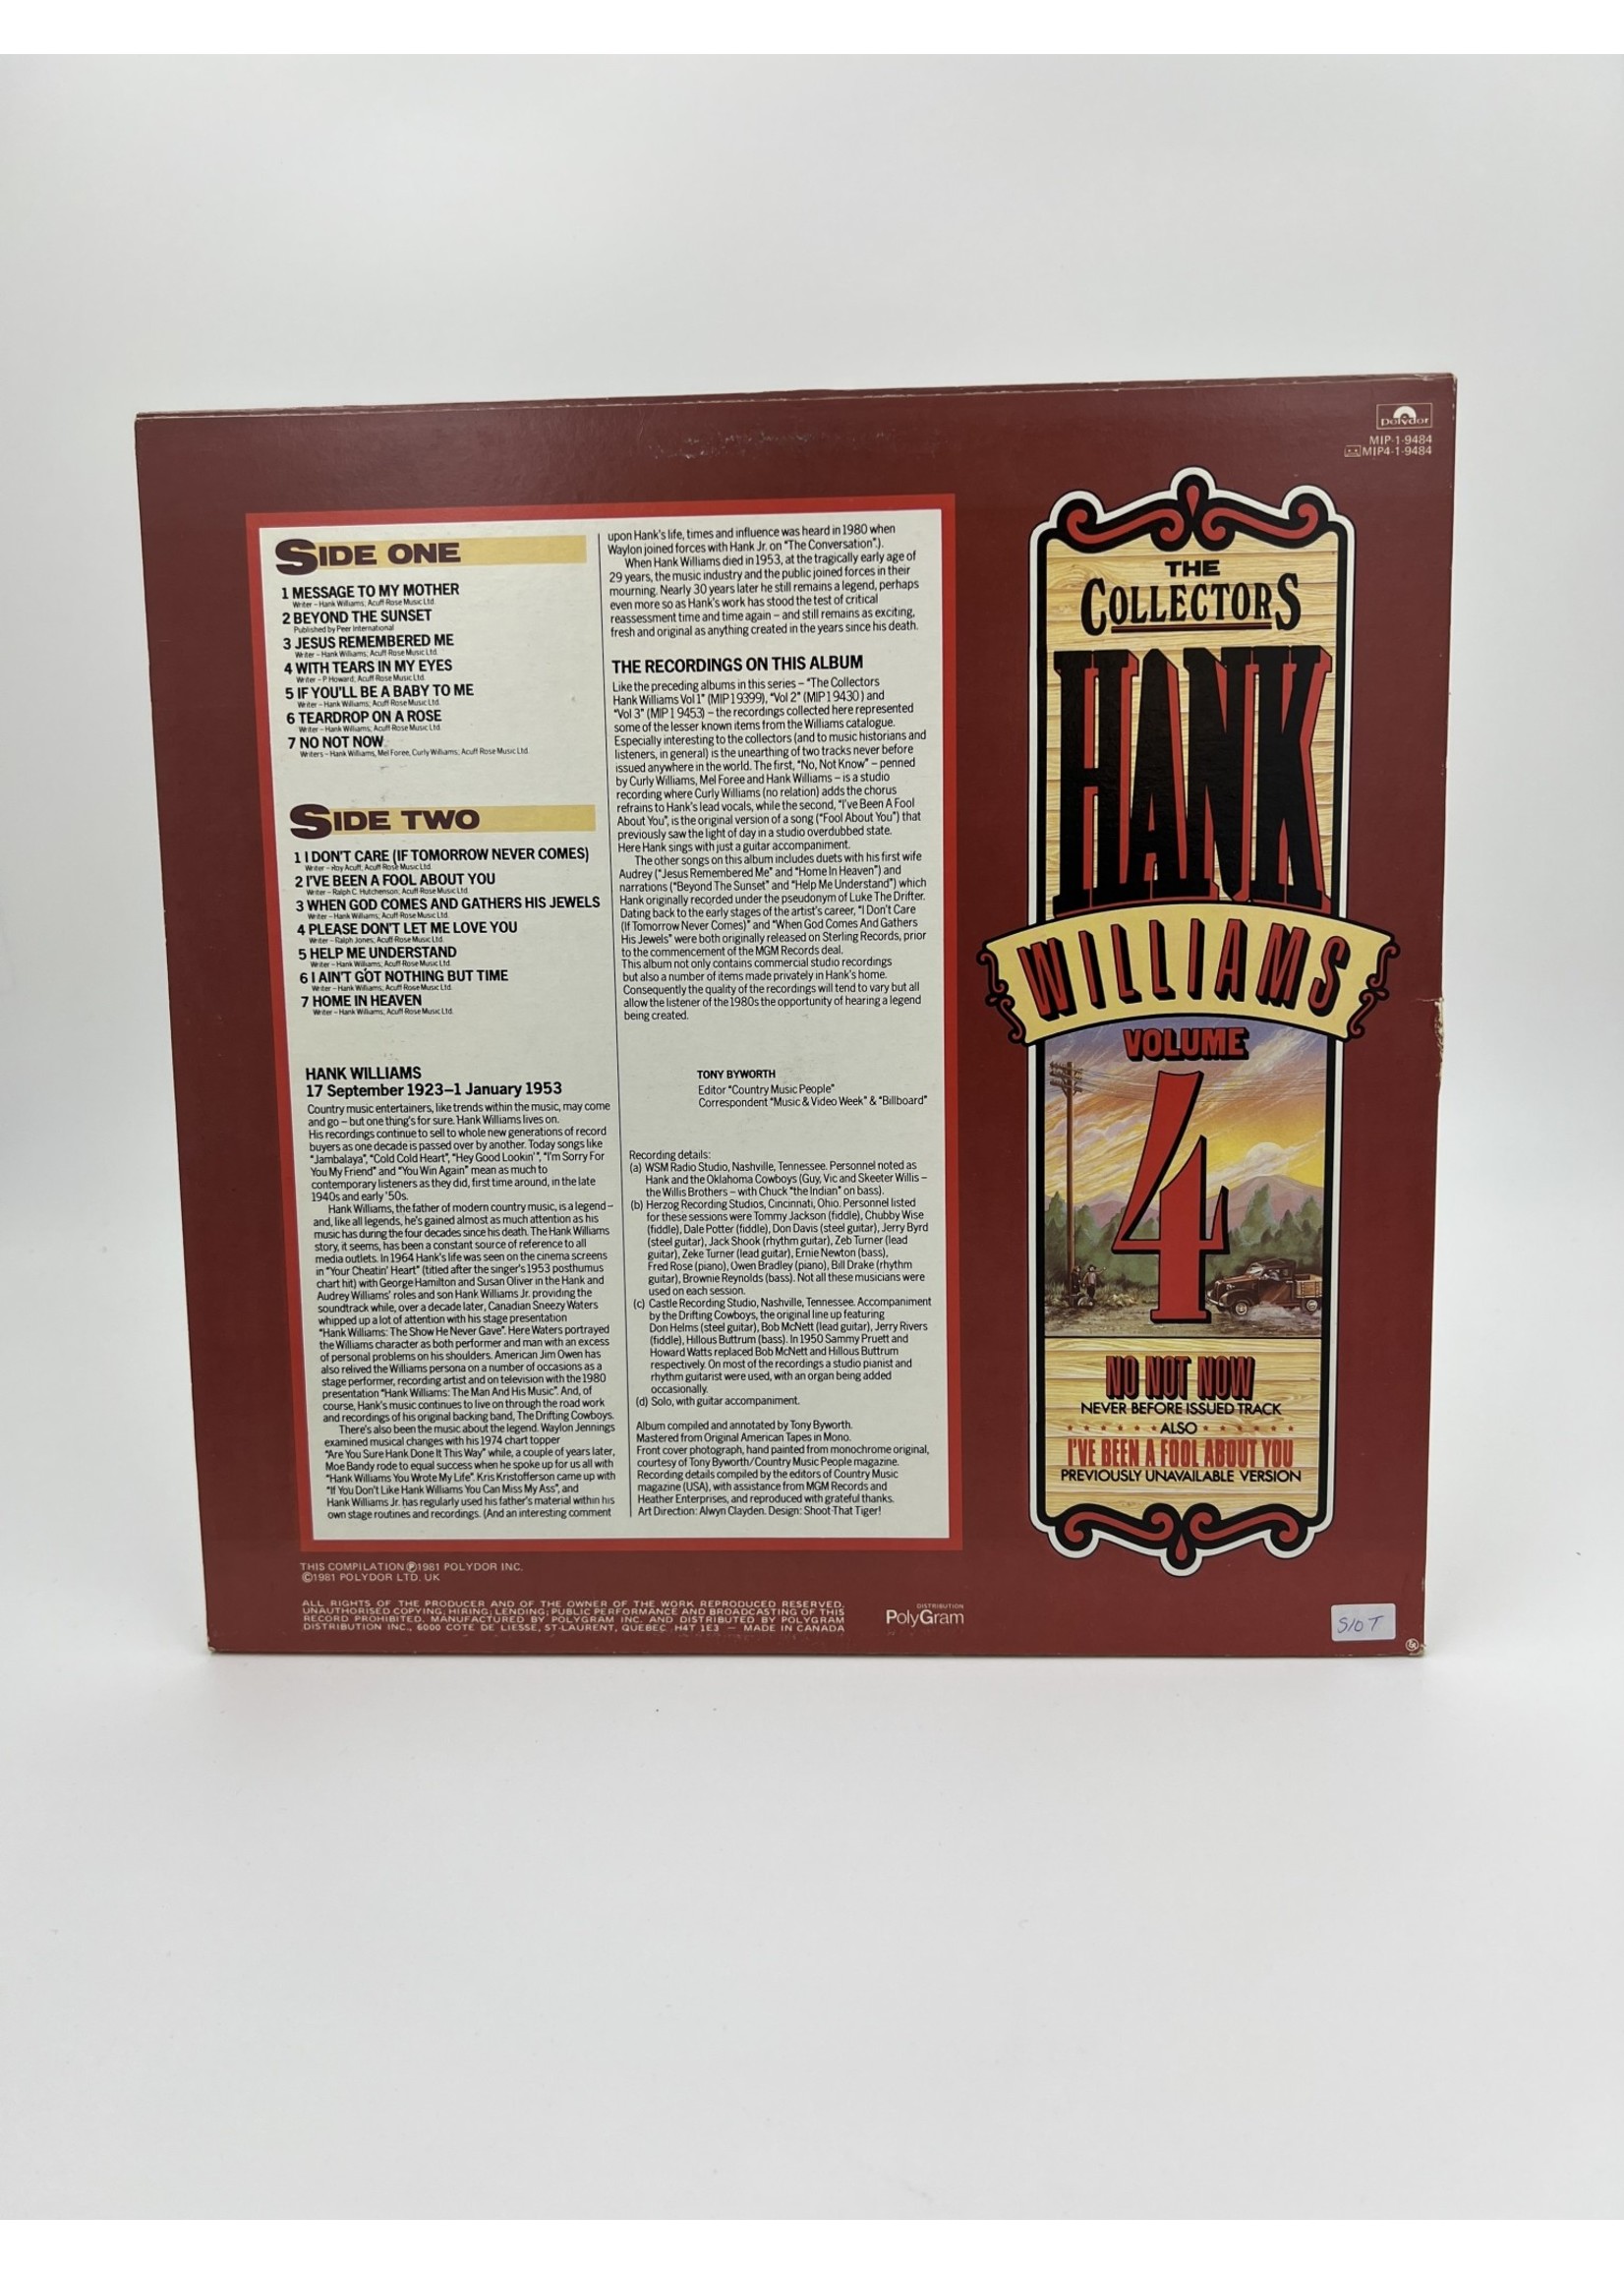 LP Hank Williams Volume 4 The Collectors LP RECORD